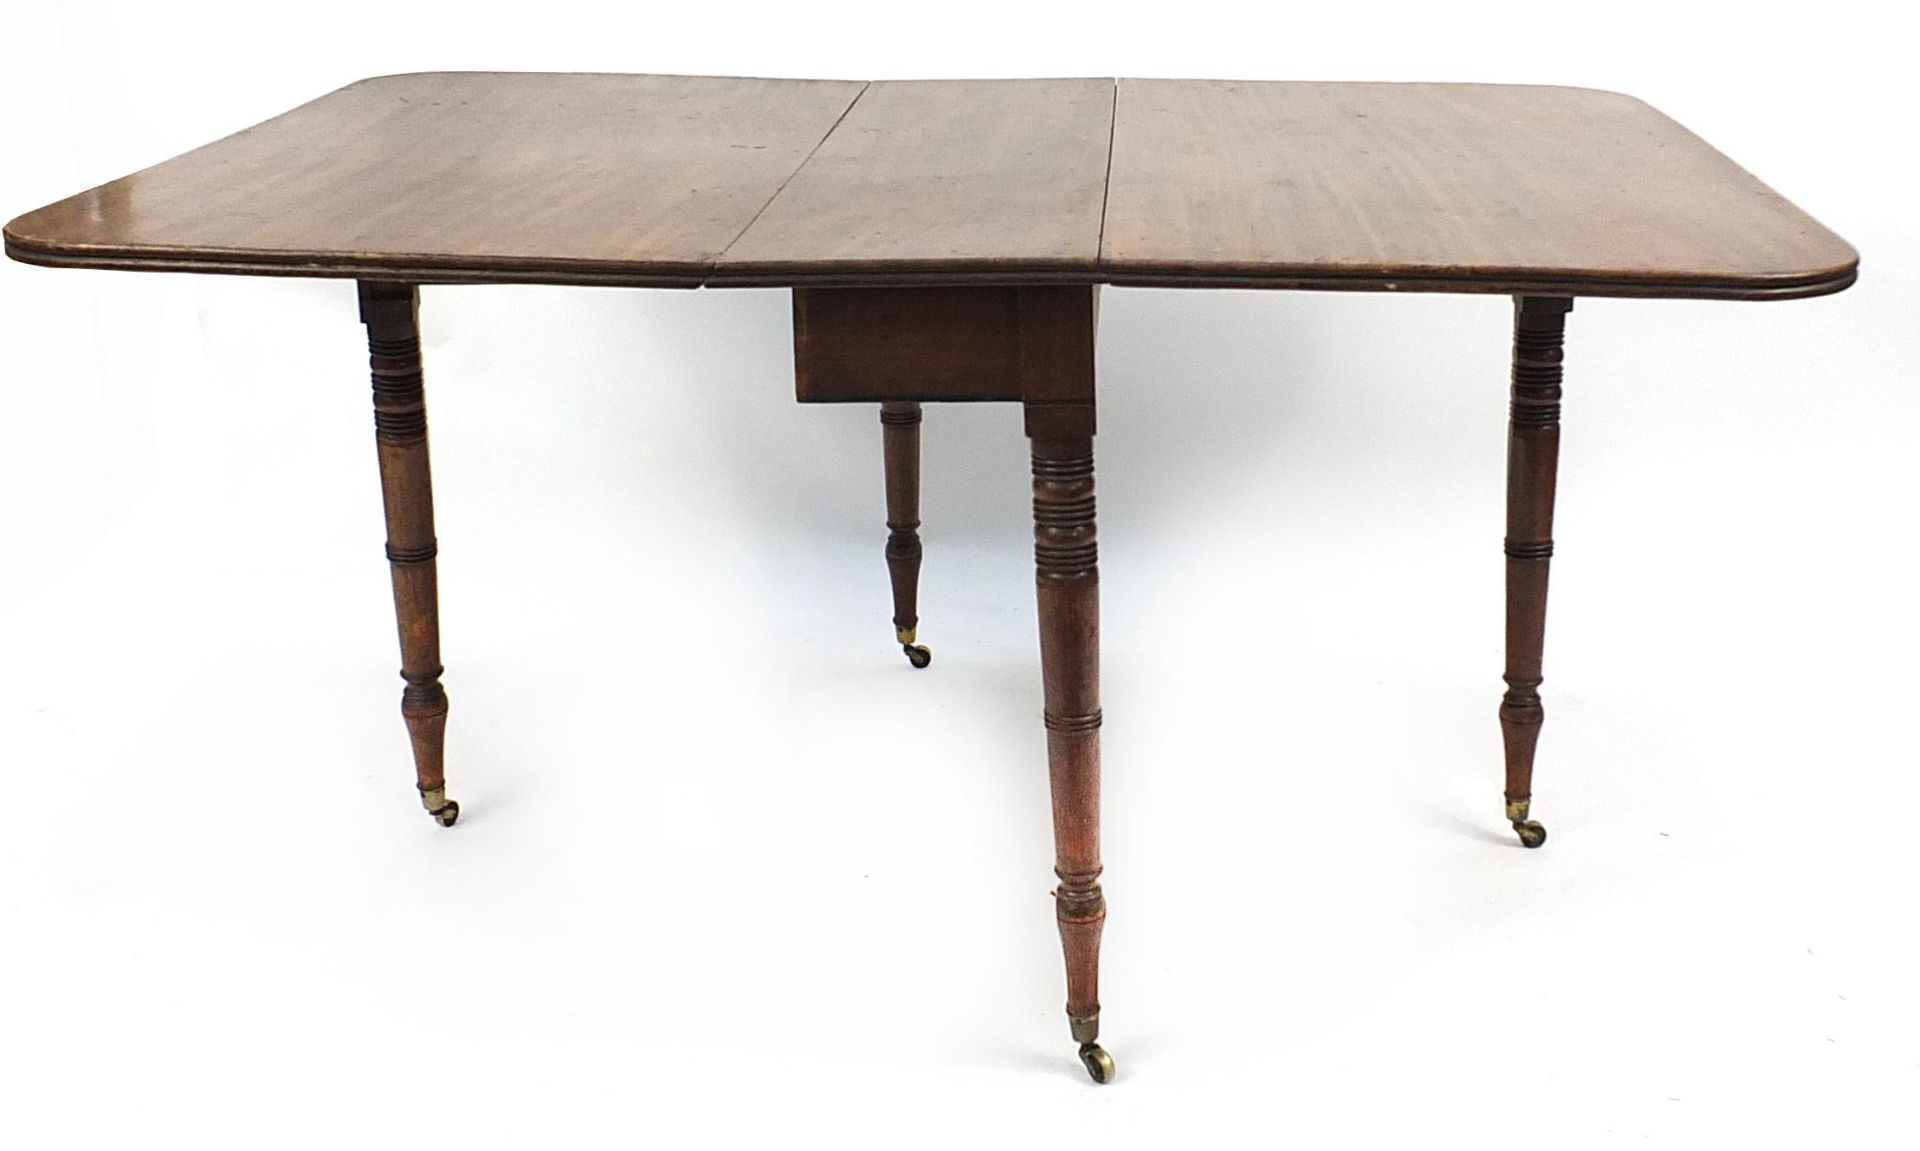 Victorian mahogany drop leaf table, 71cm H x 98cm W x 32cm D when folded - Image 3 of 4